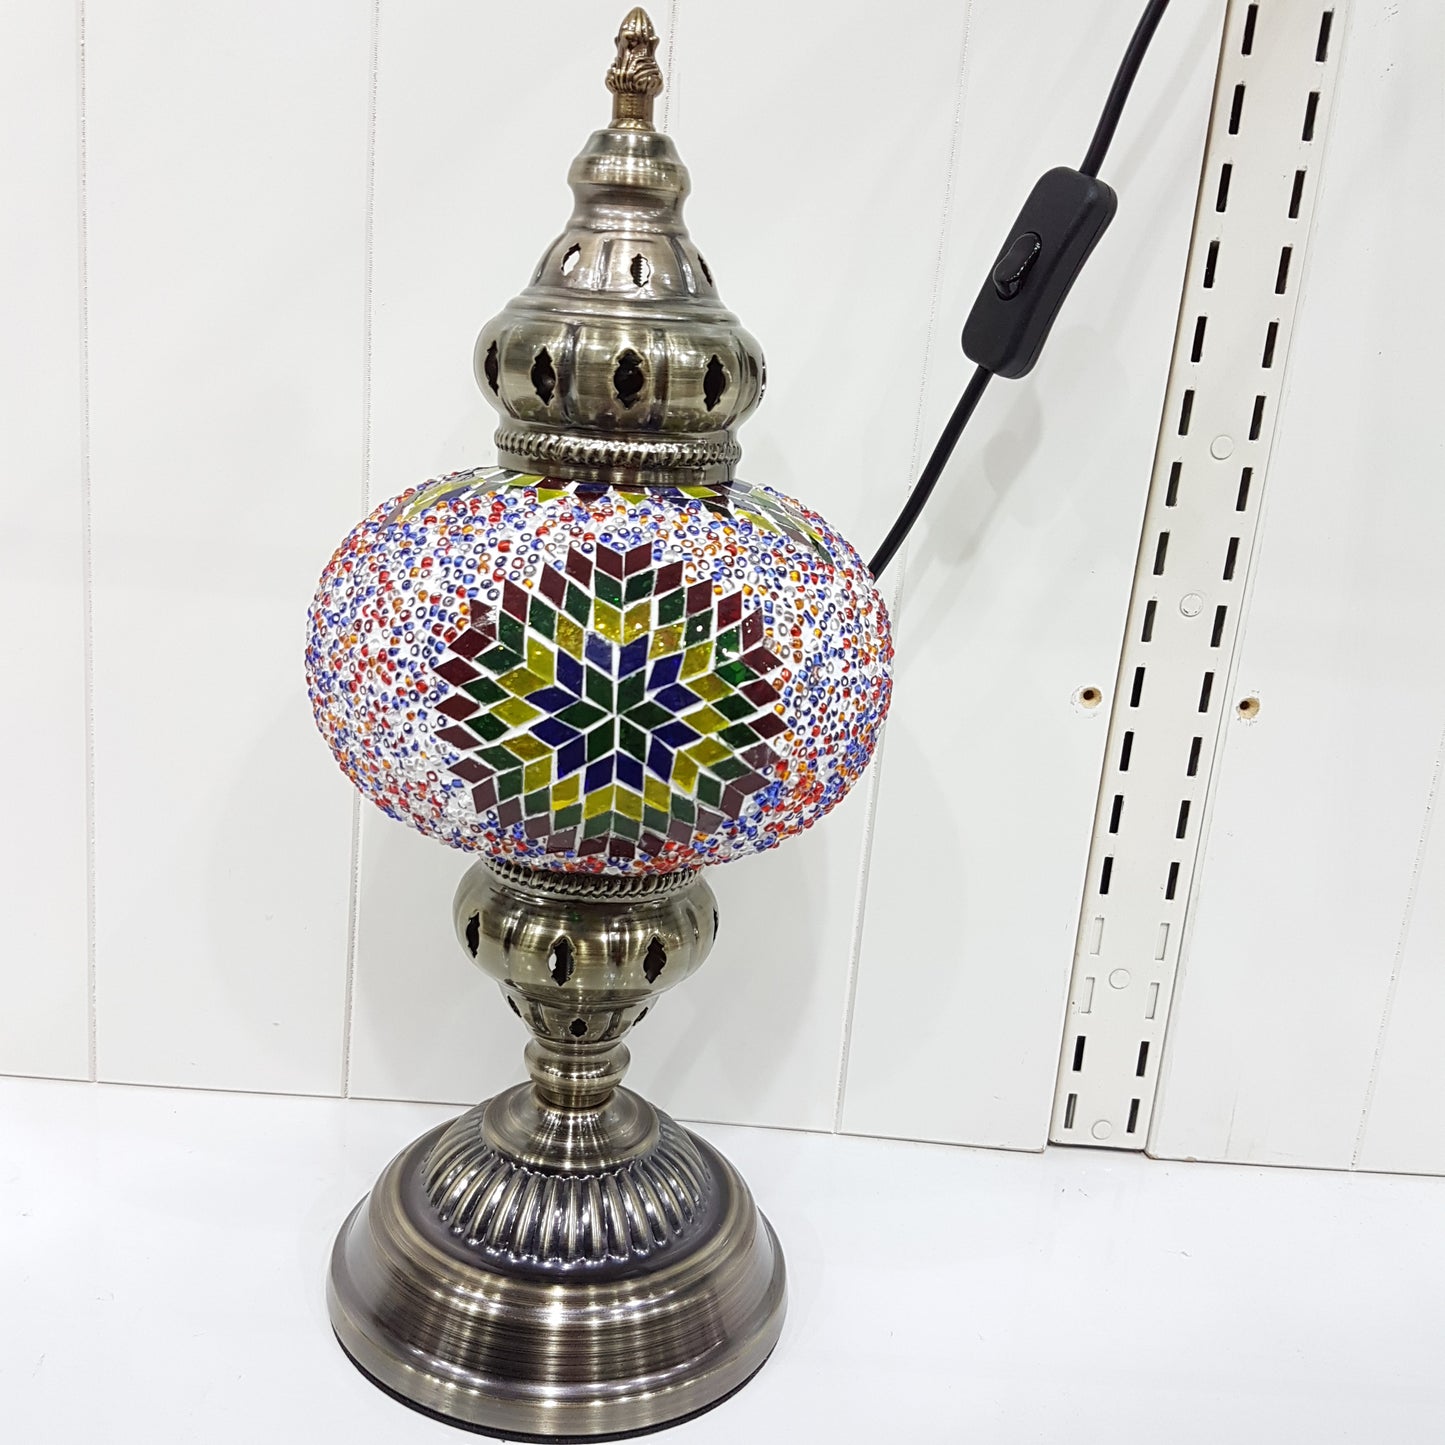 Turkish Mosaic Lamp 43cm - TL8